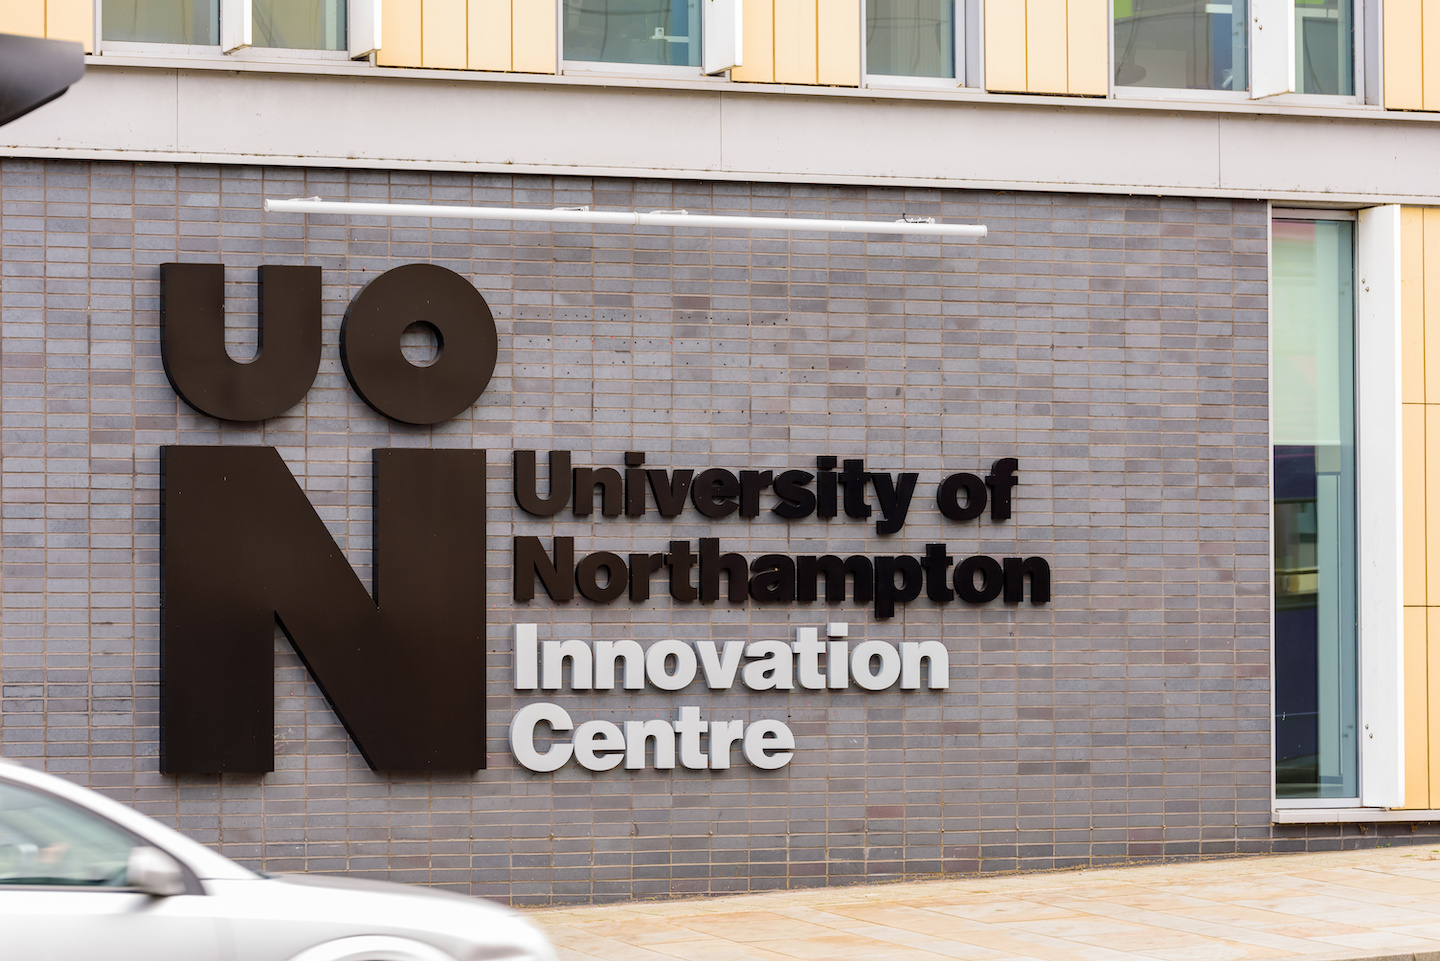 Northampton UK October 5, 2017: University of Northampton Innovation Centre logo sign in Northampton town centre.